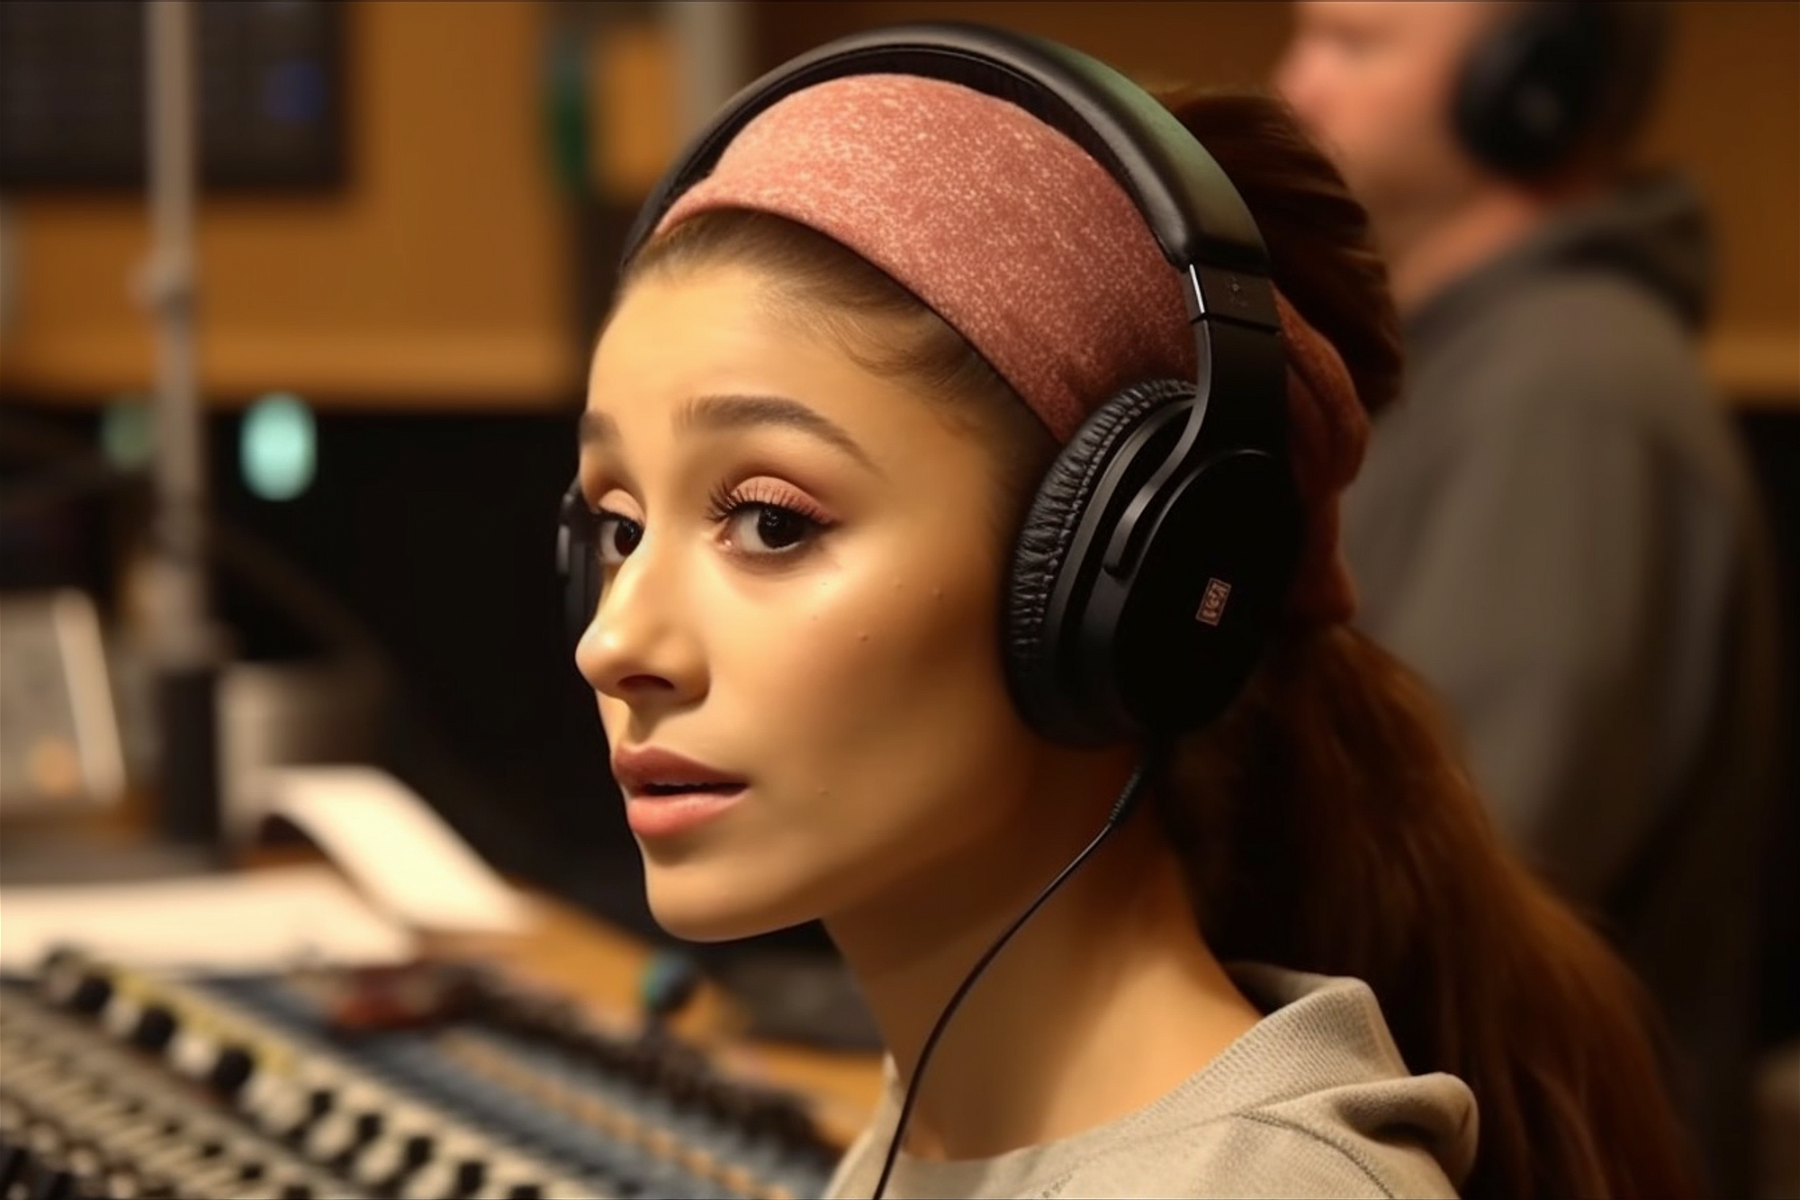 How to Make Ariana Grande AI Songs - The Full Guide!